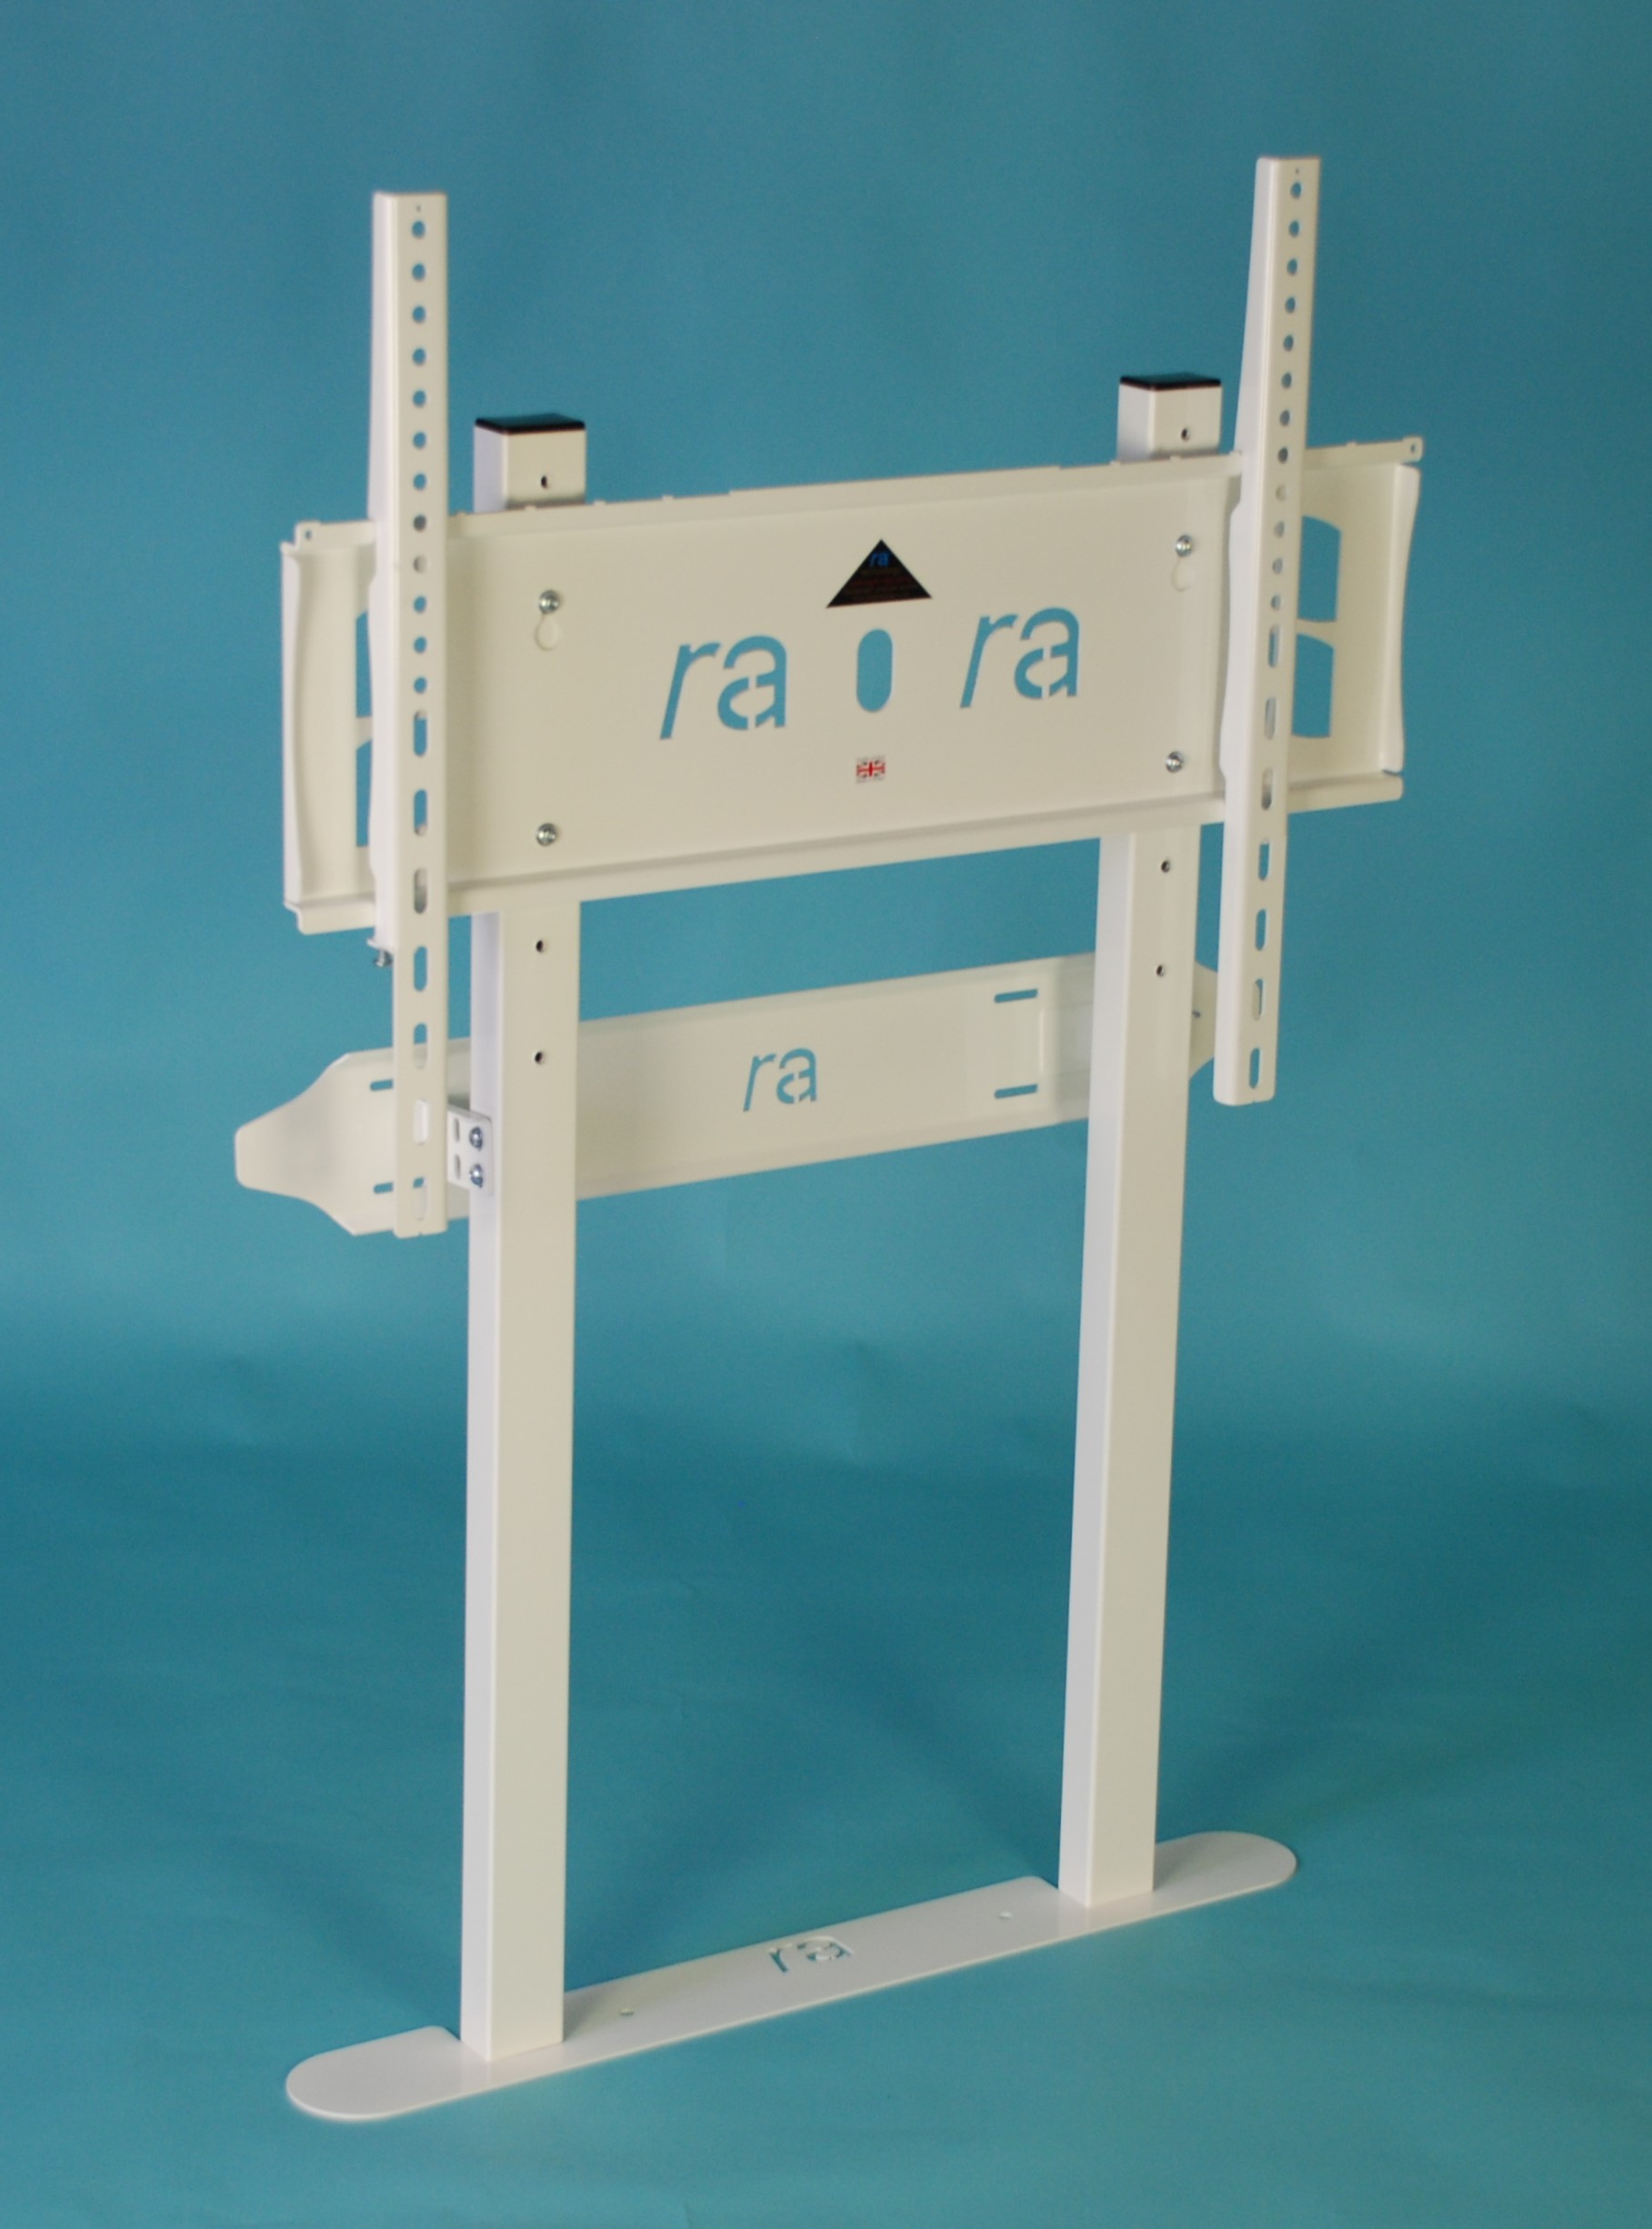 RA-Studfix-V2-NM Nursery Model. Screens up to 80kg